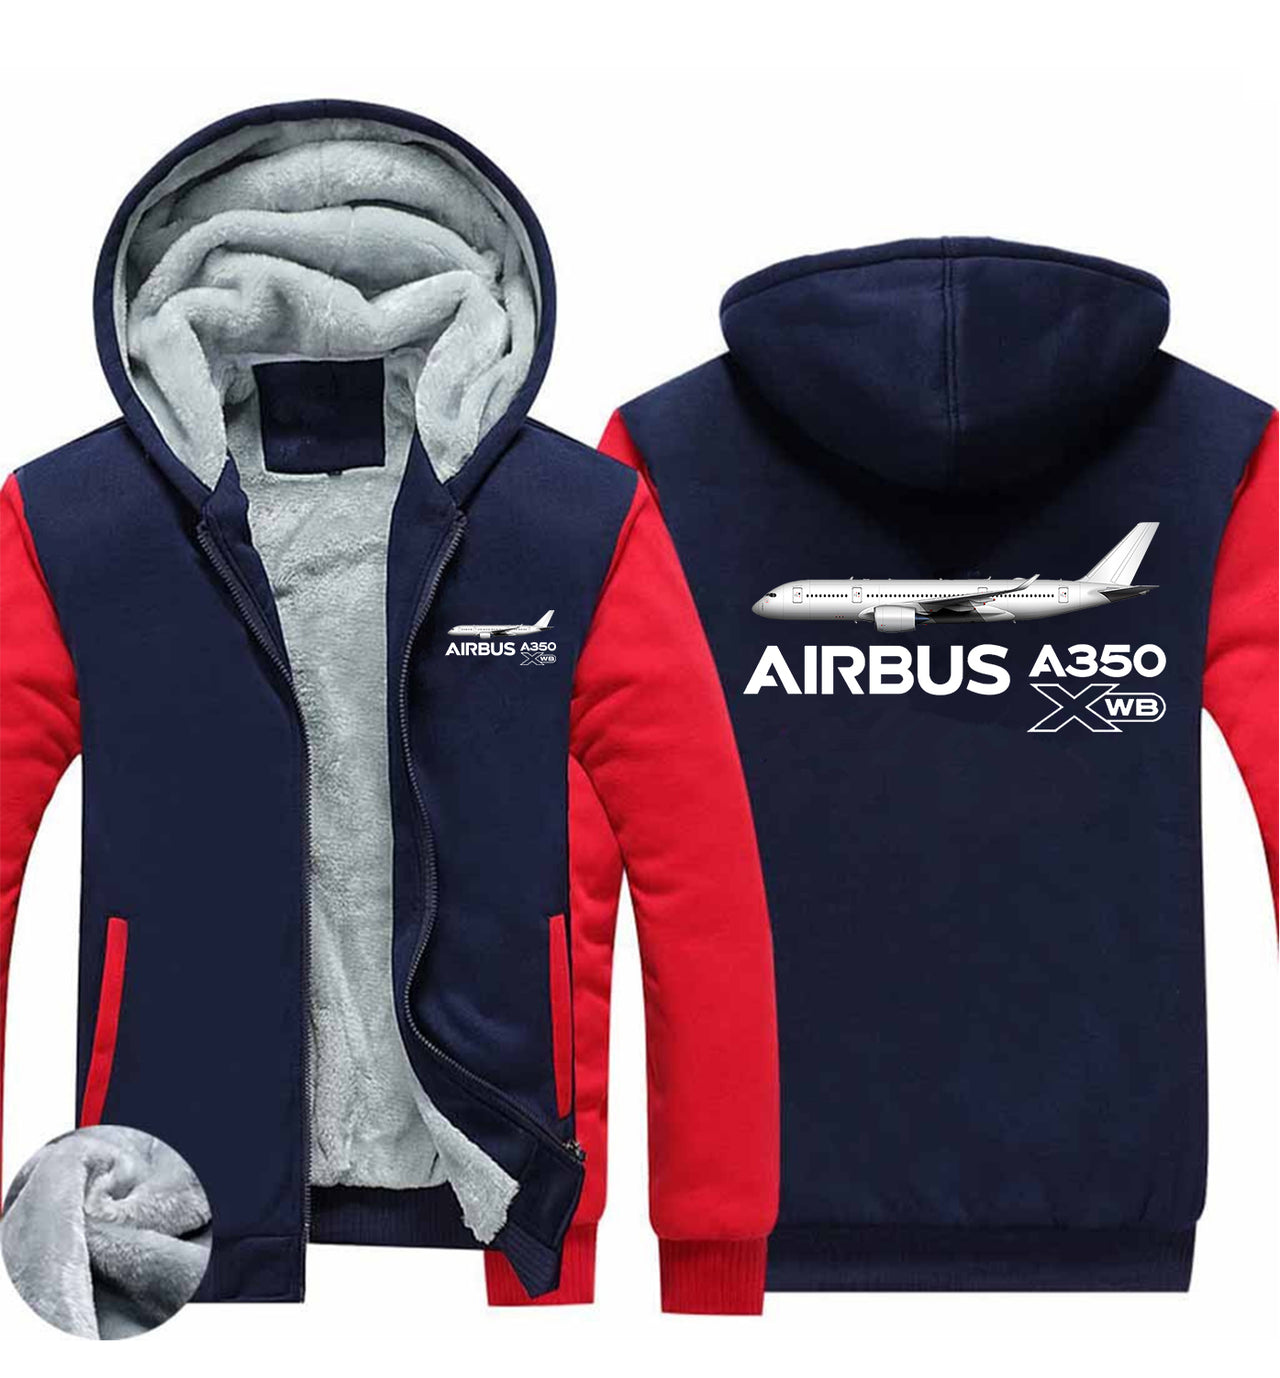 The Airbus A350 WXB Designed Zipped Sweatshirts